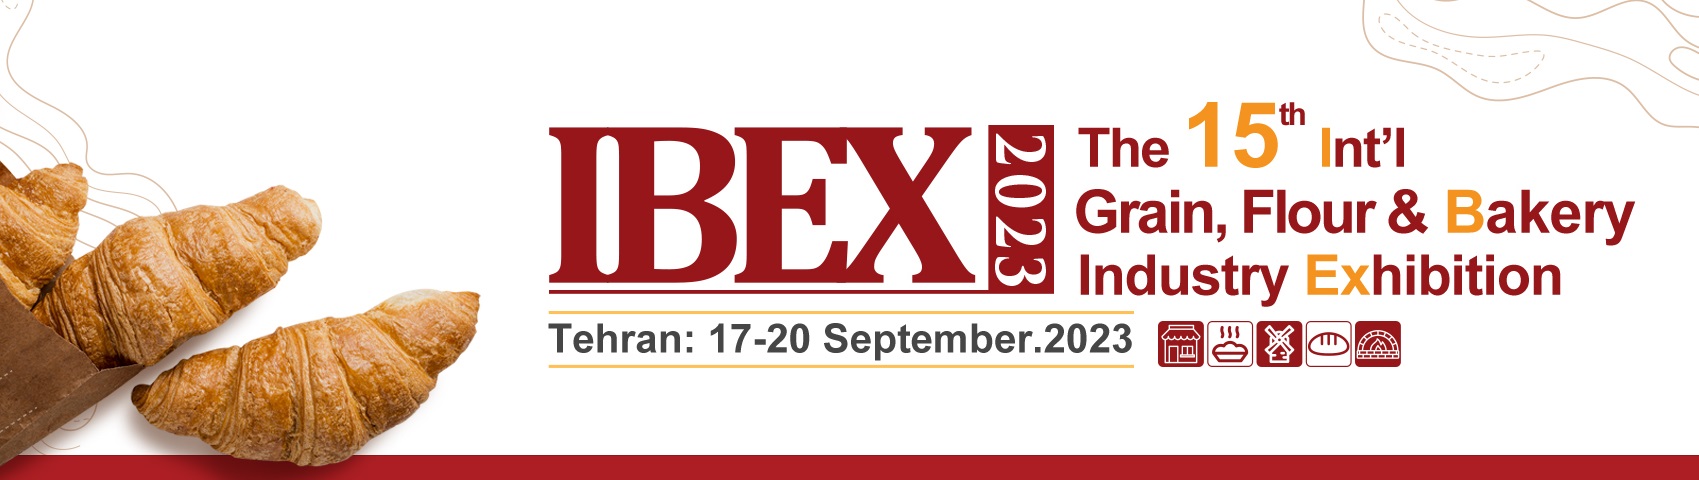 IBEX 2023 in Tehran – The 15th International Grain, Flour & Bakery Industry Exhibition in Iran